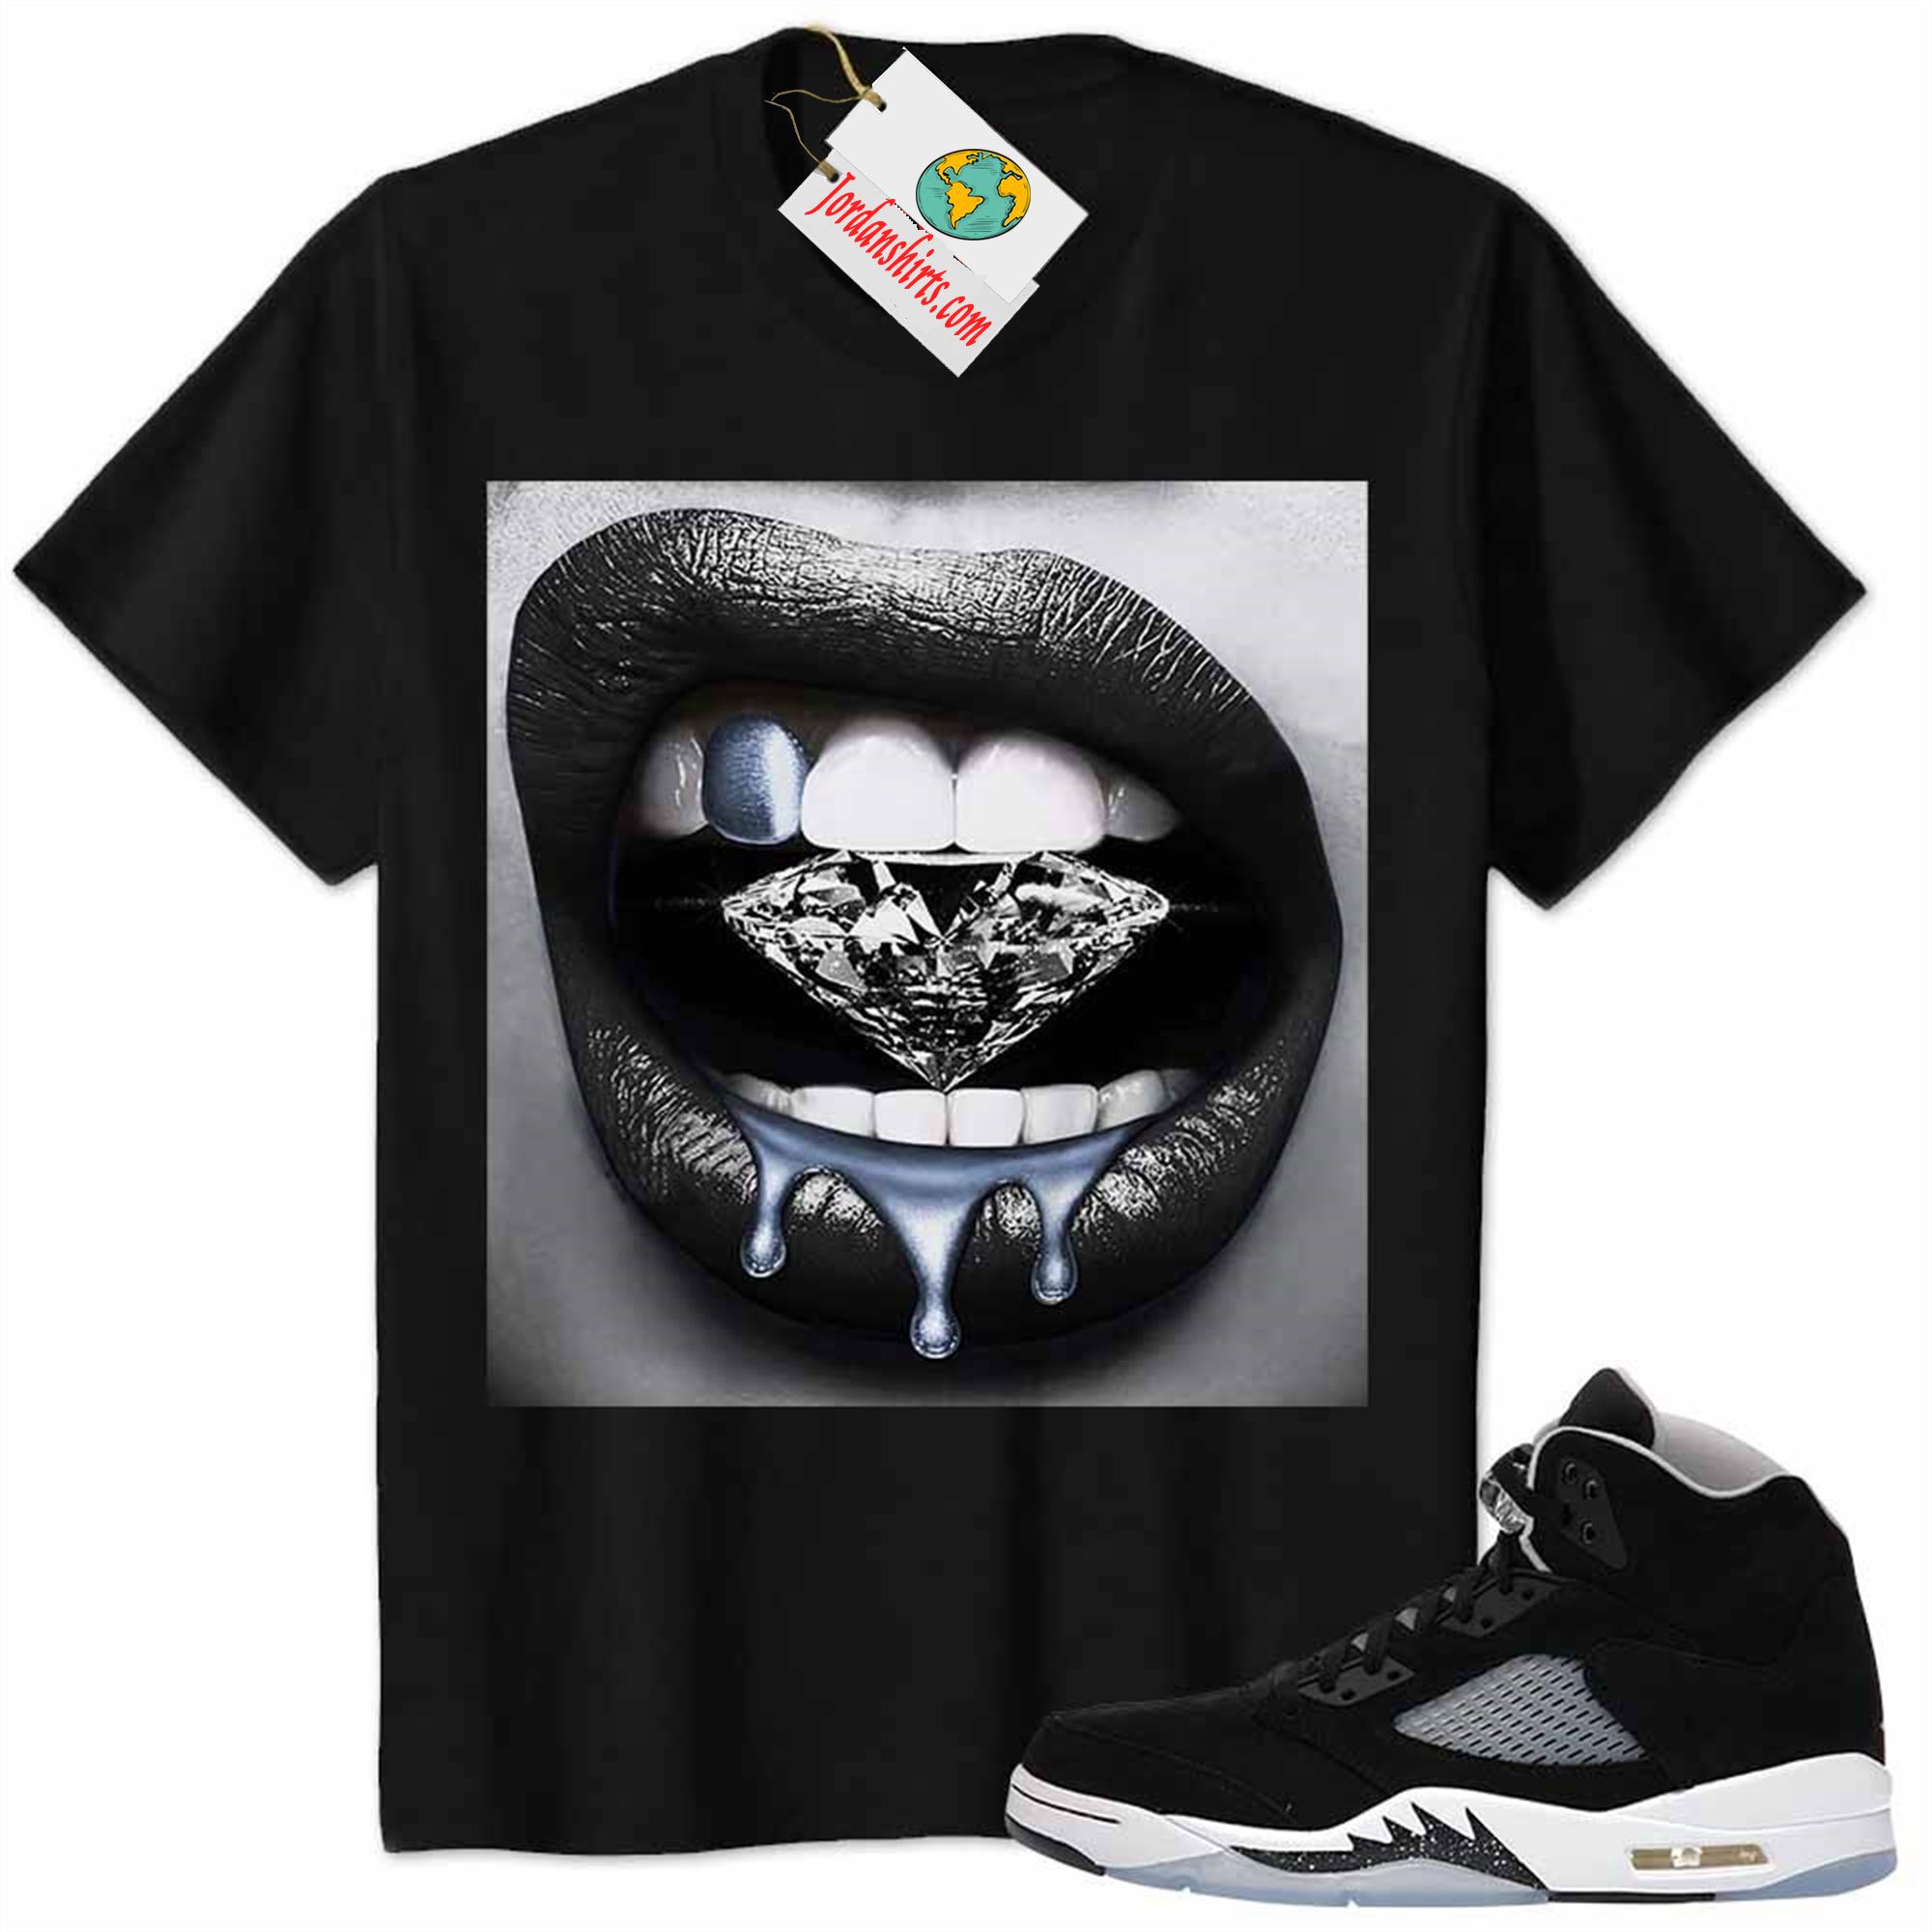 Jordan 5 Shirt, Moonlight Shirt Sexy Lip Bite Diamond Dripping Black Size Up To 5xl